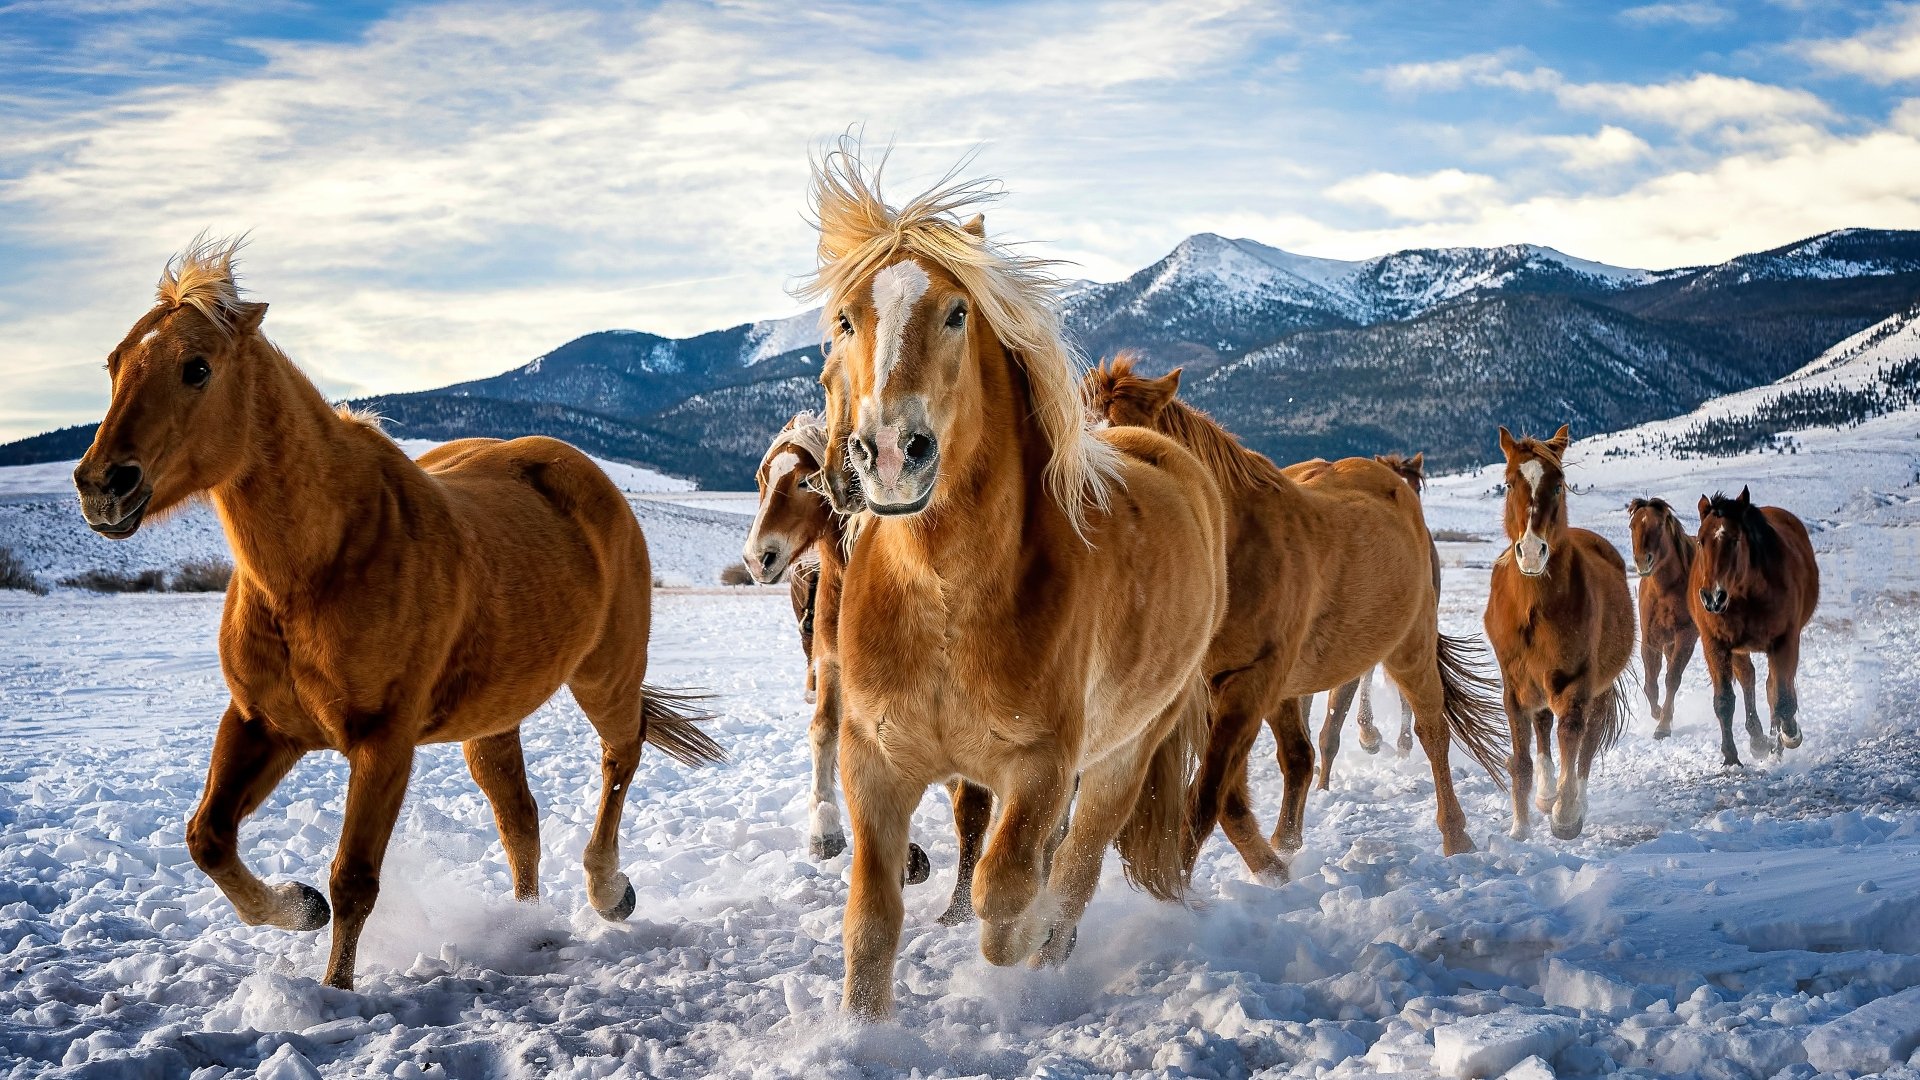 Animal Horse 4k Ultra HD Wallpaper